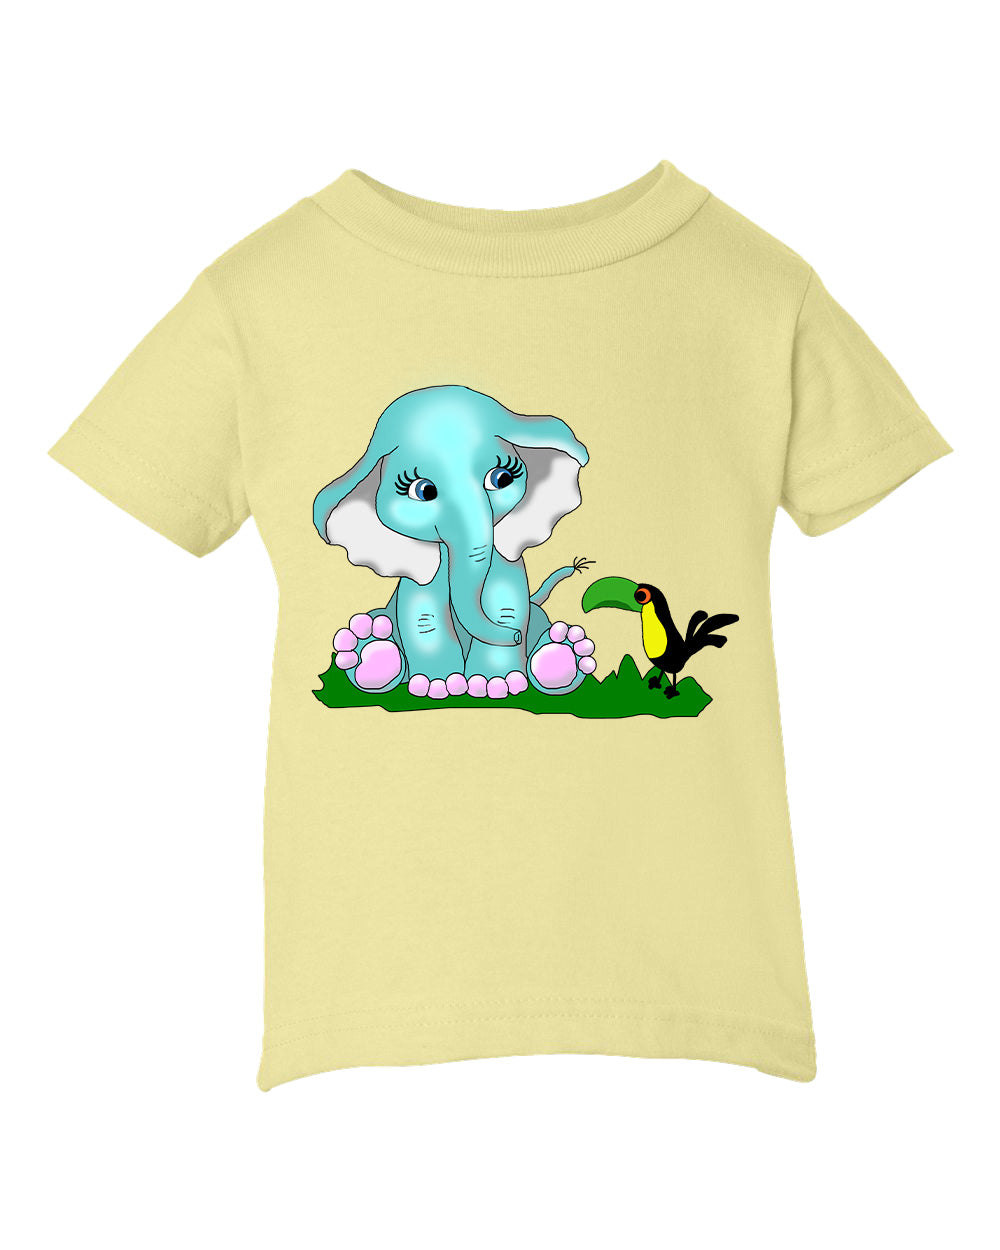 Elephant Toddler T-shirt